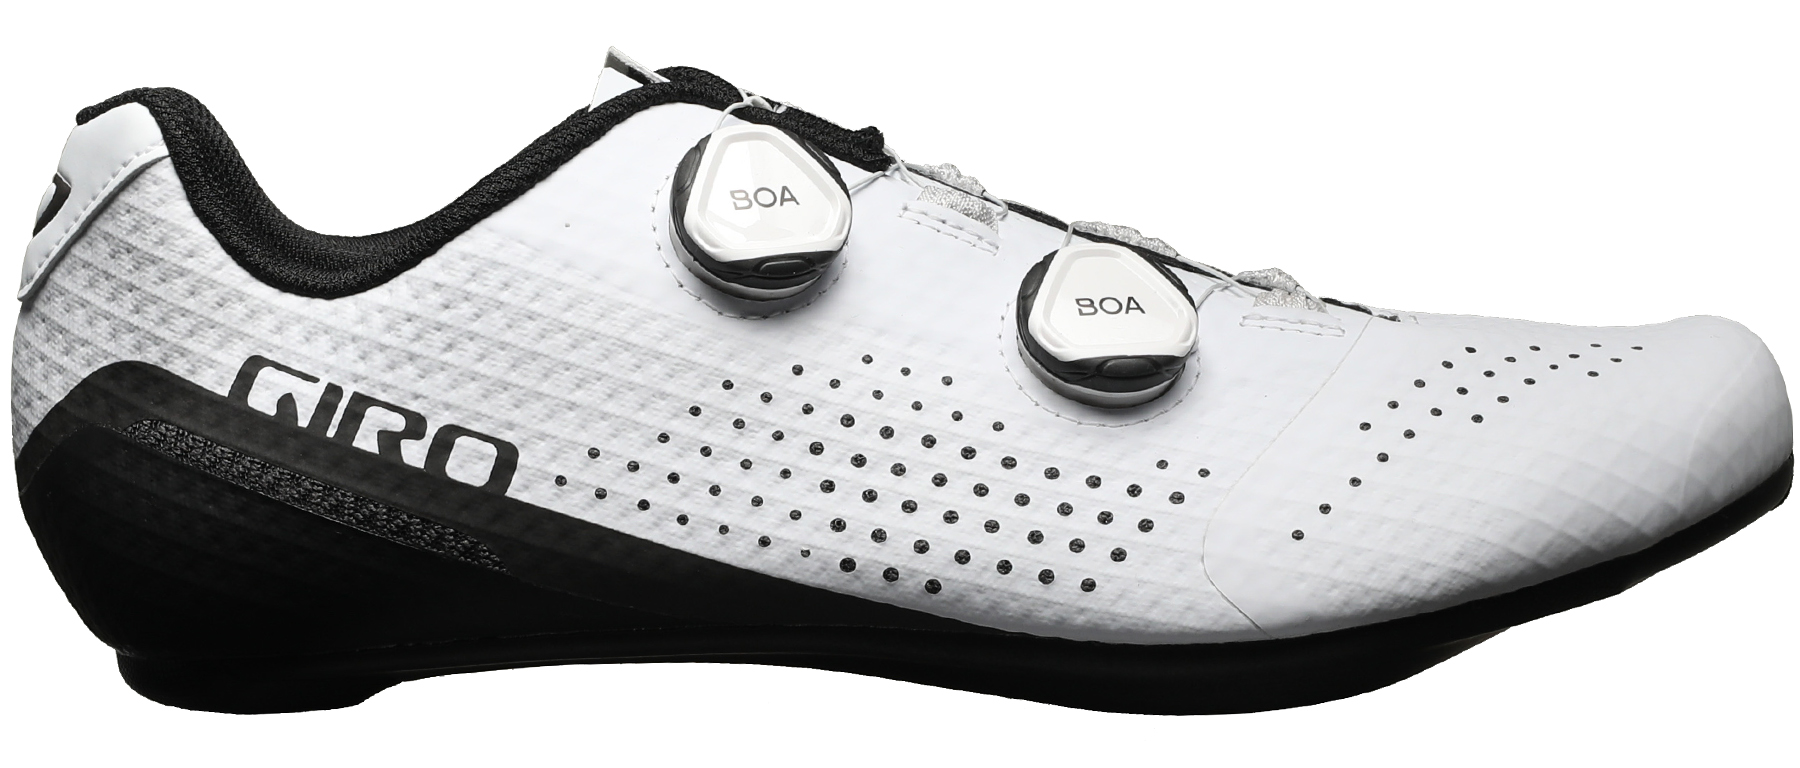 Giro Regime Shoe